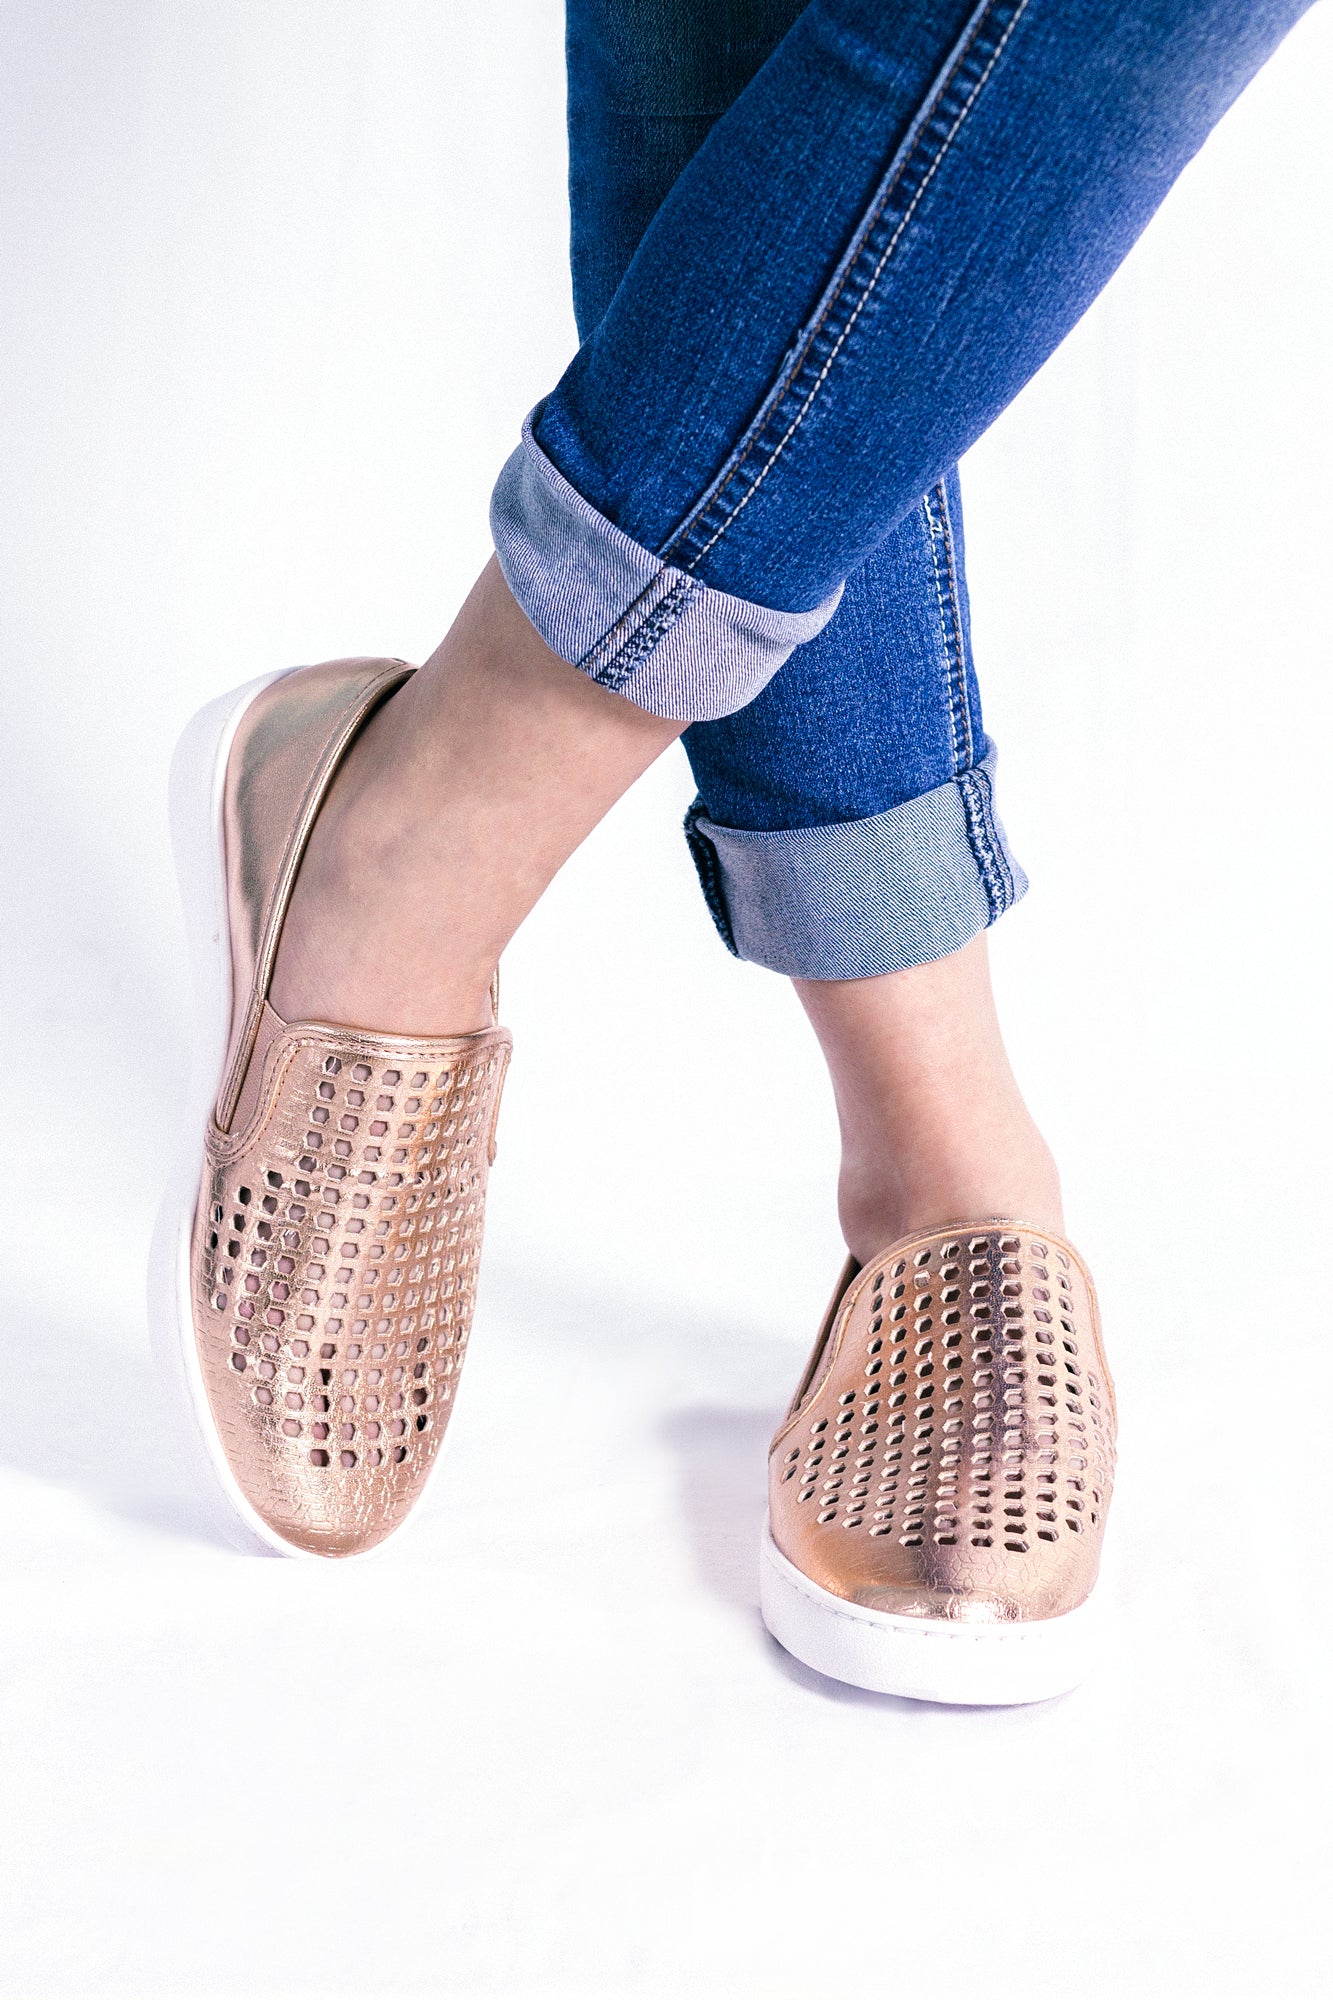 Garneau Women's Monte Rosa Shoe Size EU 38 (064361)